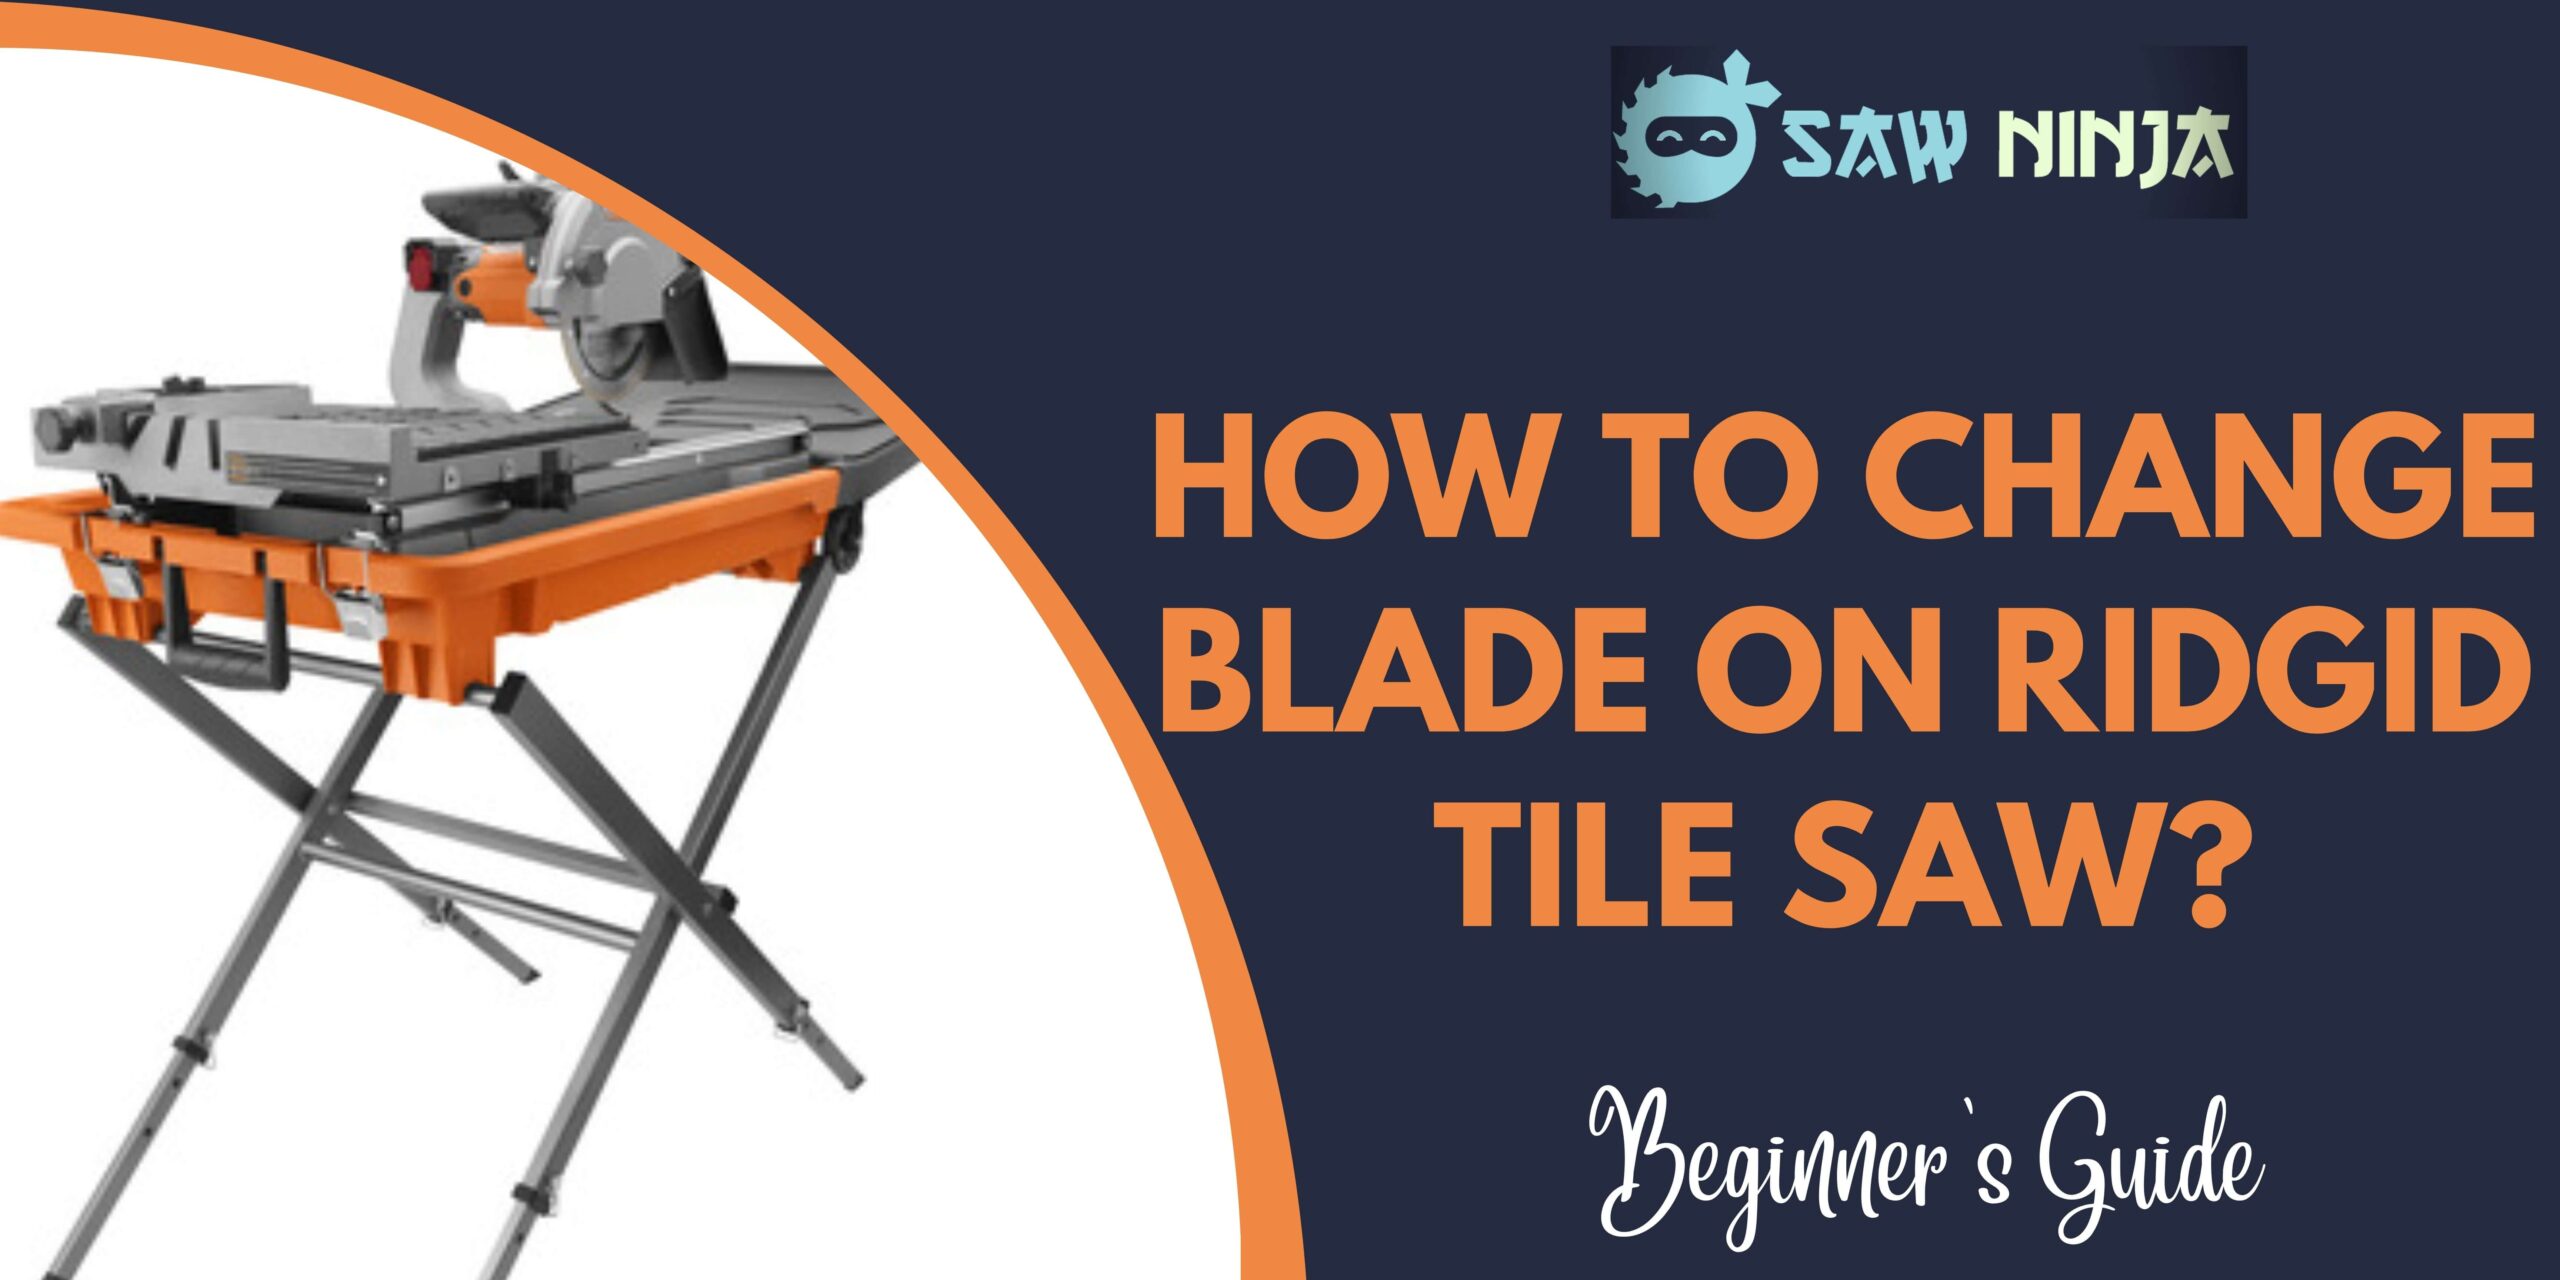 How to Change Blade on Ridgid Tile Saw